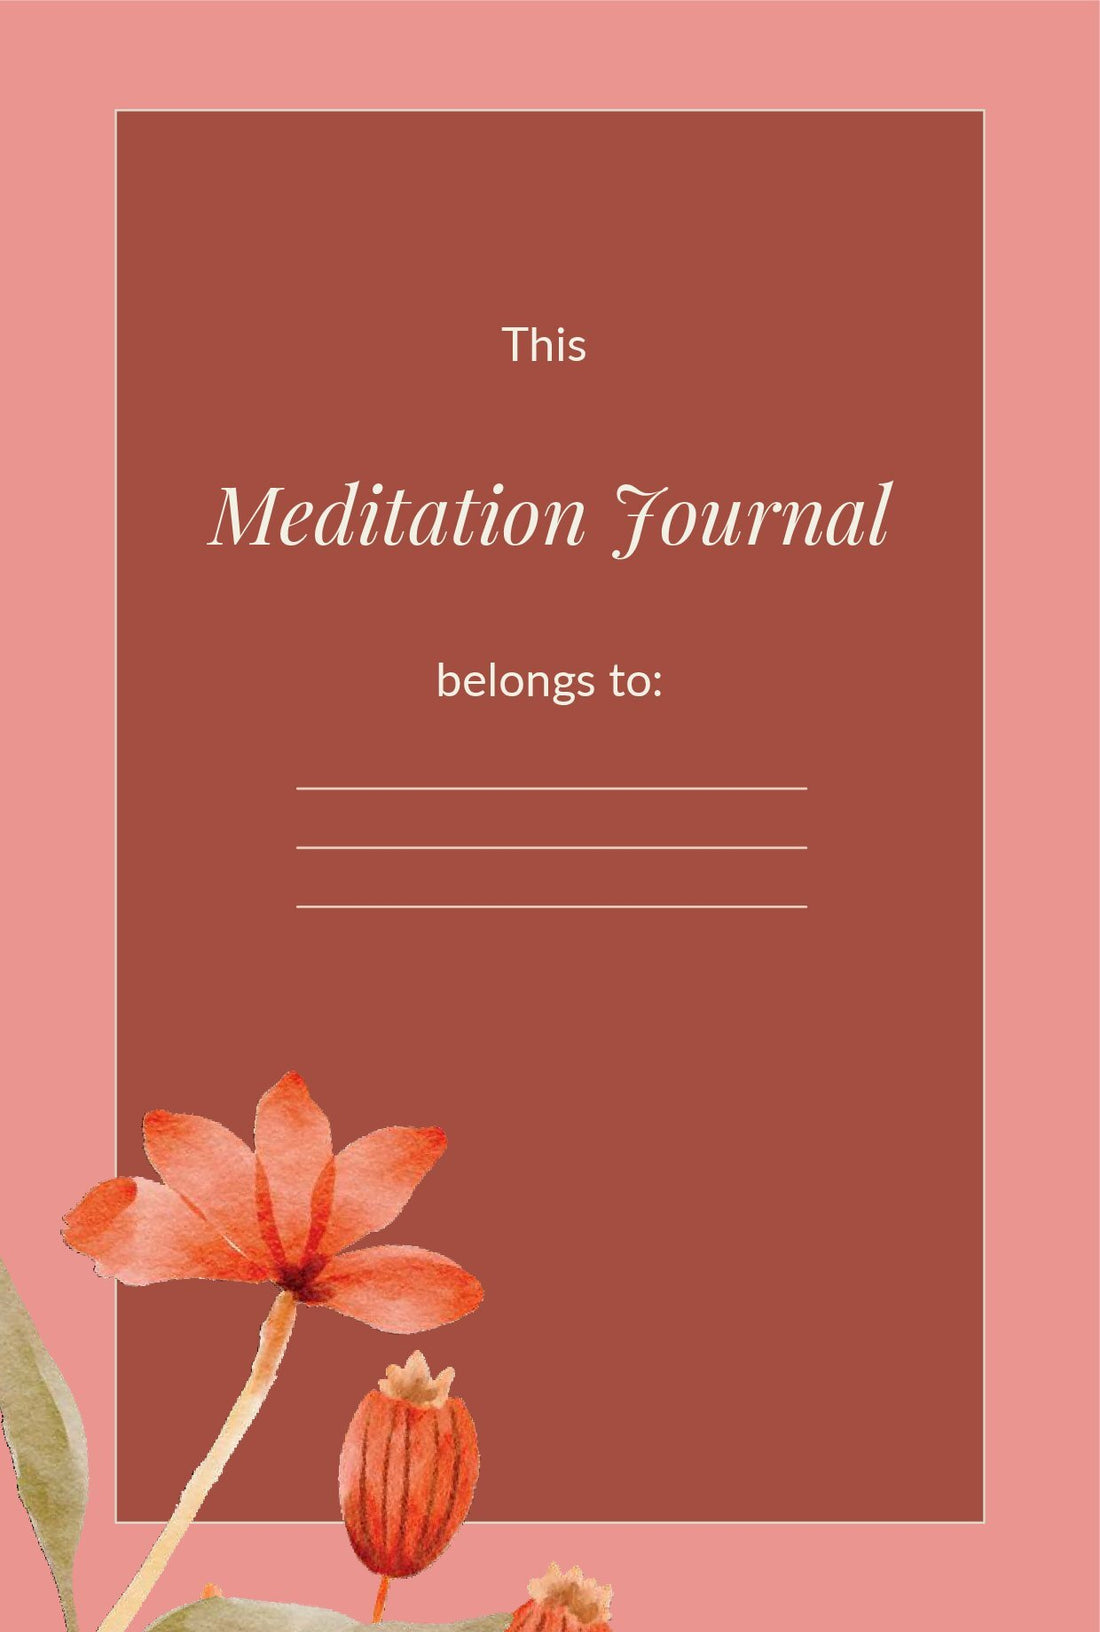 My Meditation Journal